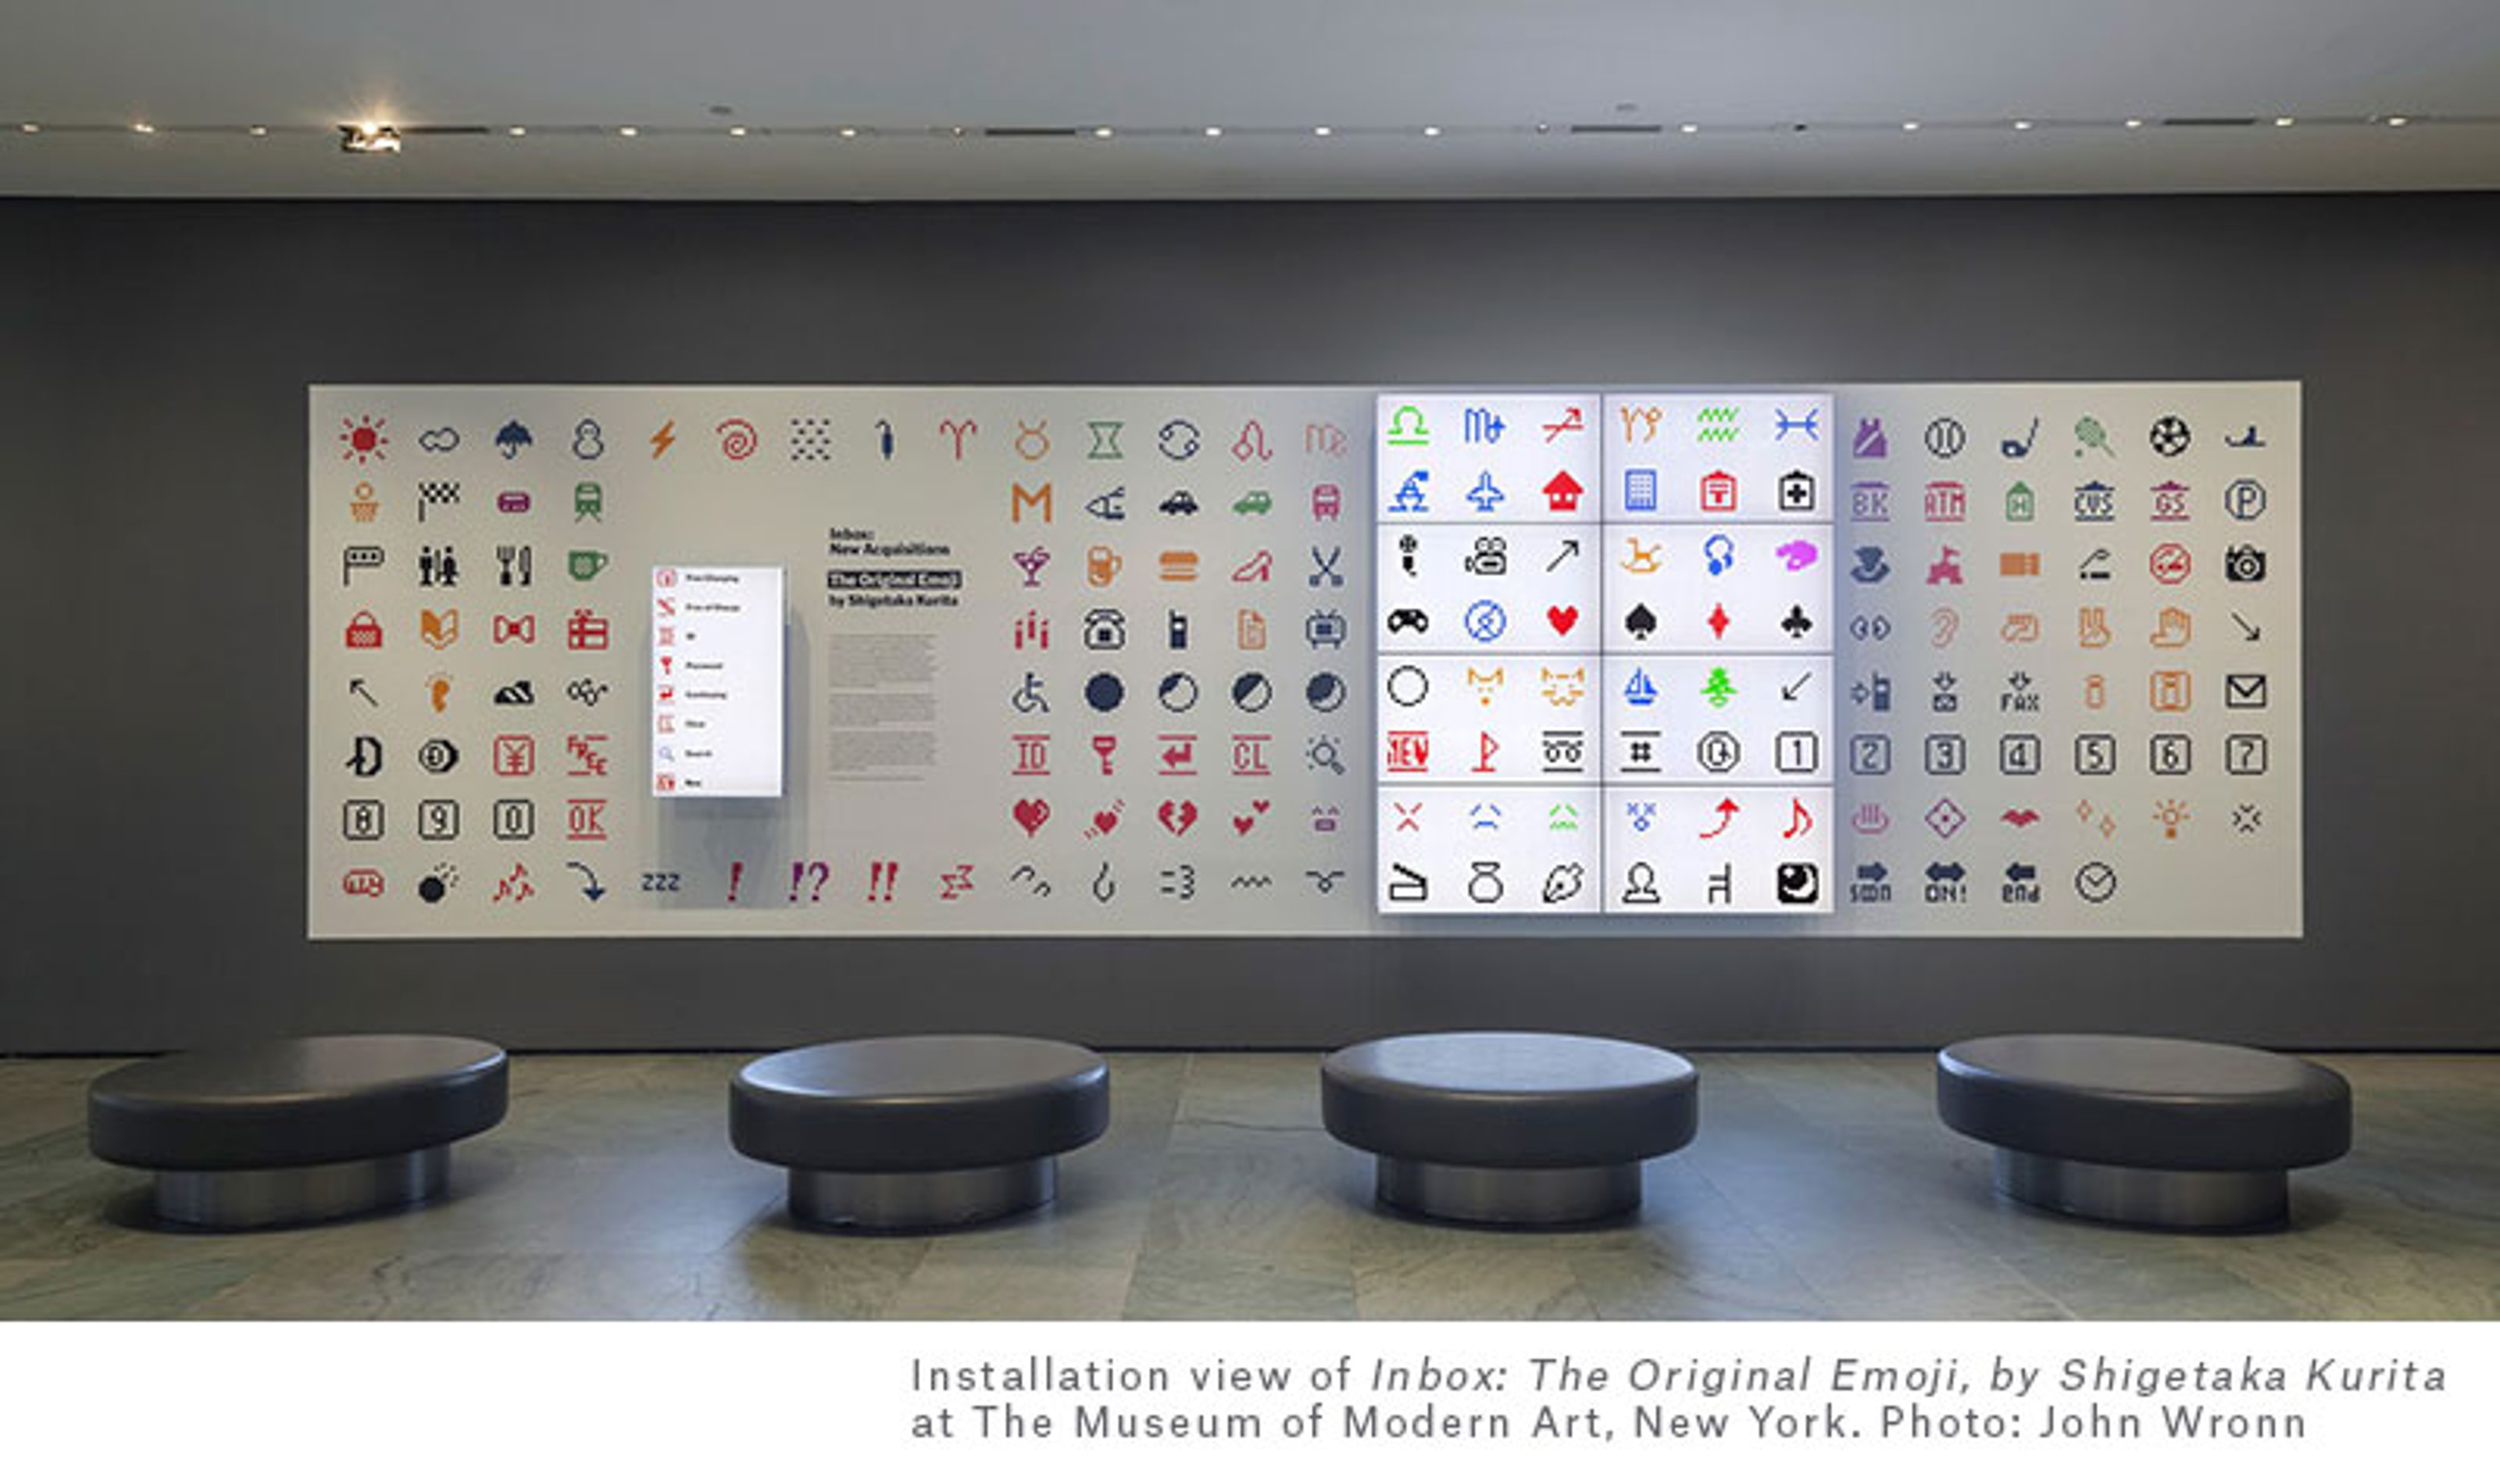 Installation view of Inbox: The Original Emoji, by Shigetaka Kurita at The Museum of Modern Art, New York